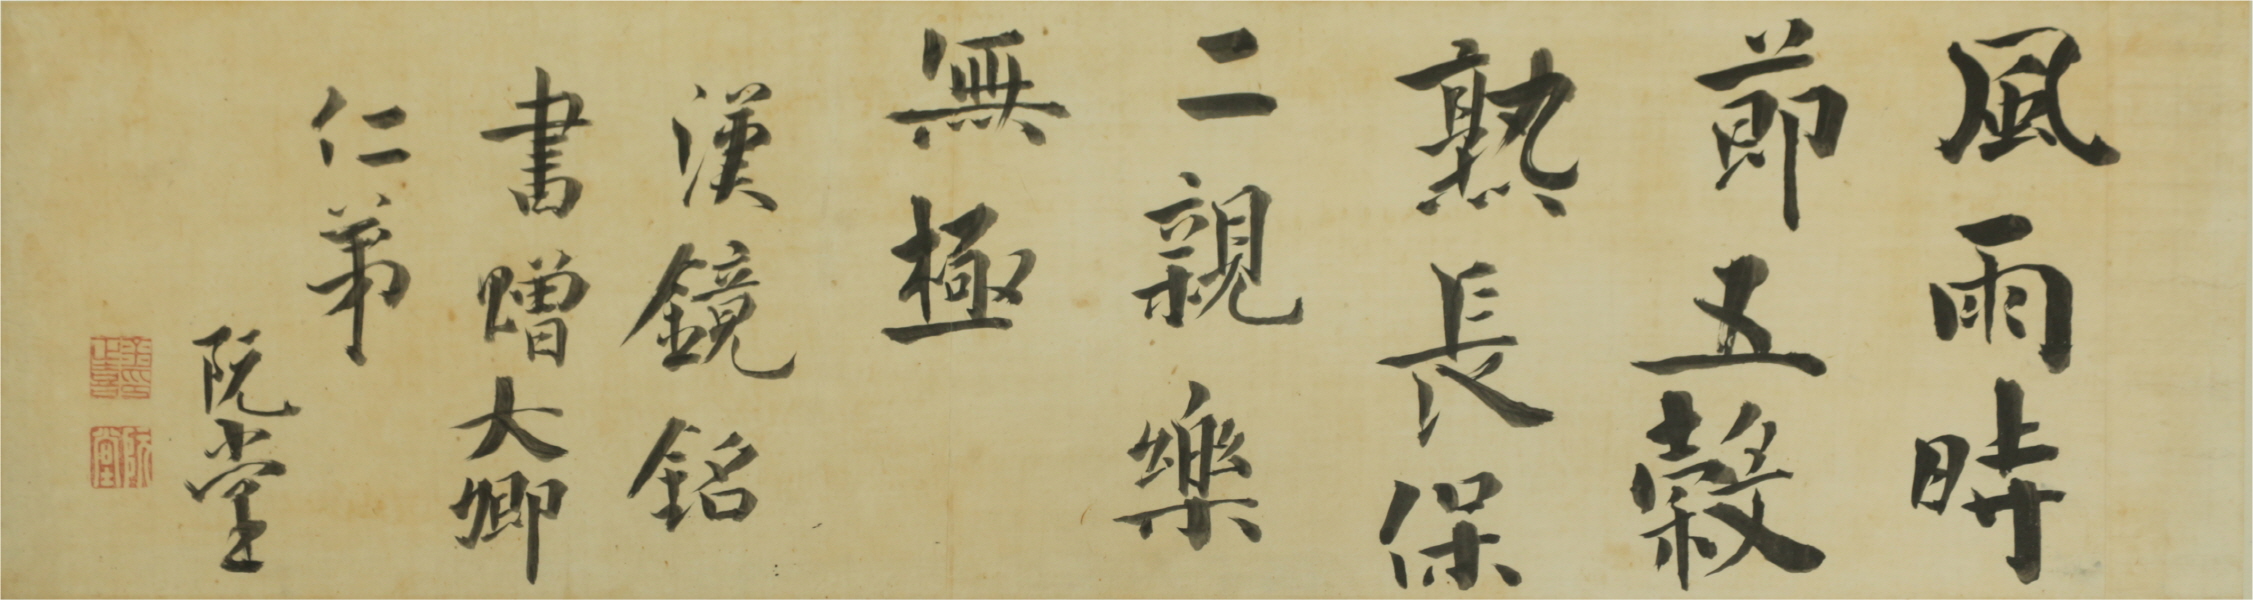 Chusa (秋史) Kim Jeong-hui (金正喜, 1786~1856), Han-kyung-myung, Suh-zeung-dae-kyung-in-jae 漢鏡銘, 書贈大卿仁第, mid 19th century, ink on paper 紙本墨書, 26x99cm ⓒHakgojae Gallery